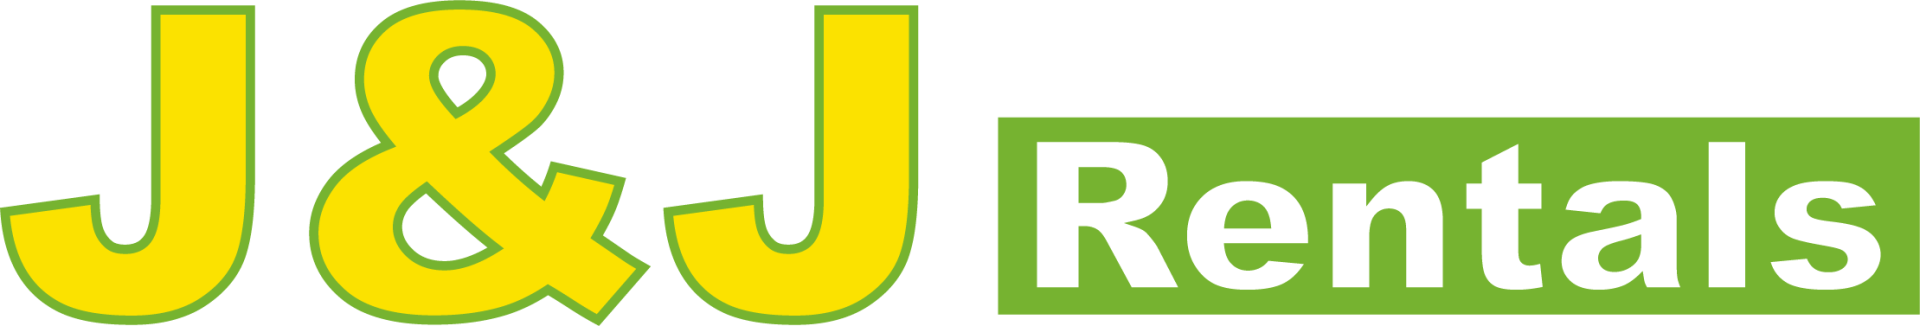 J&J Rentals logo footer